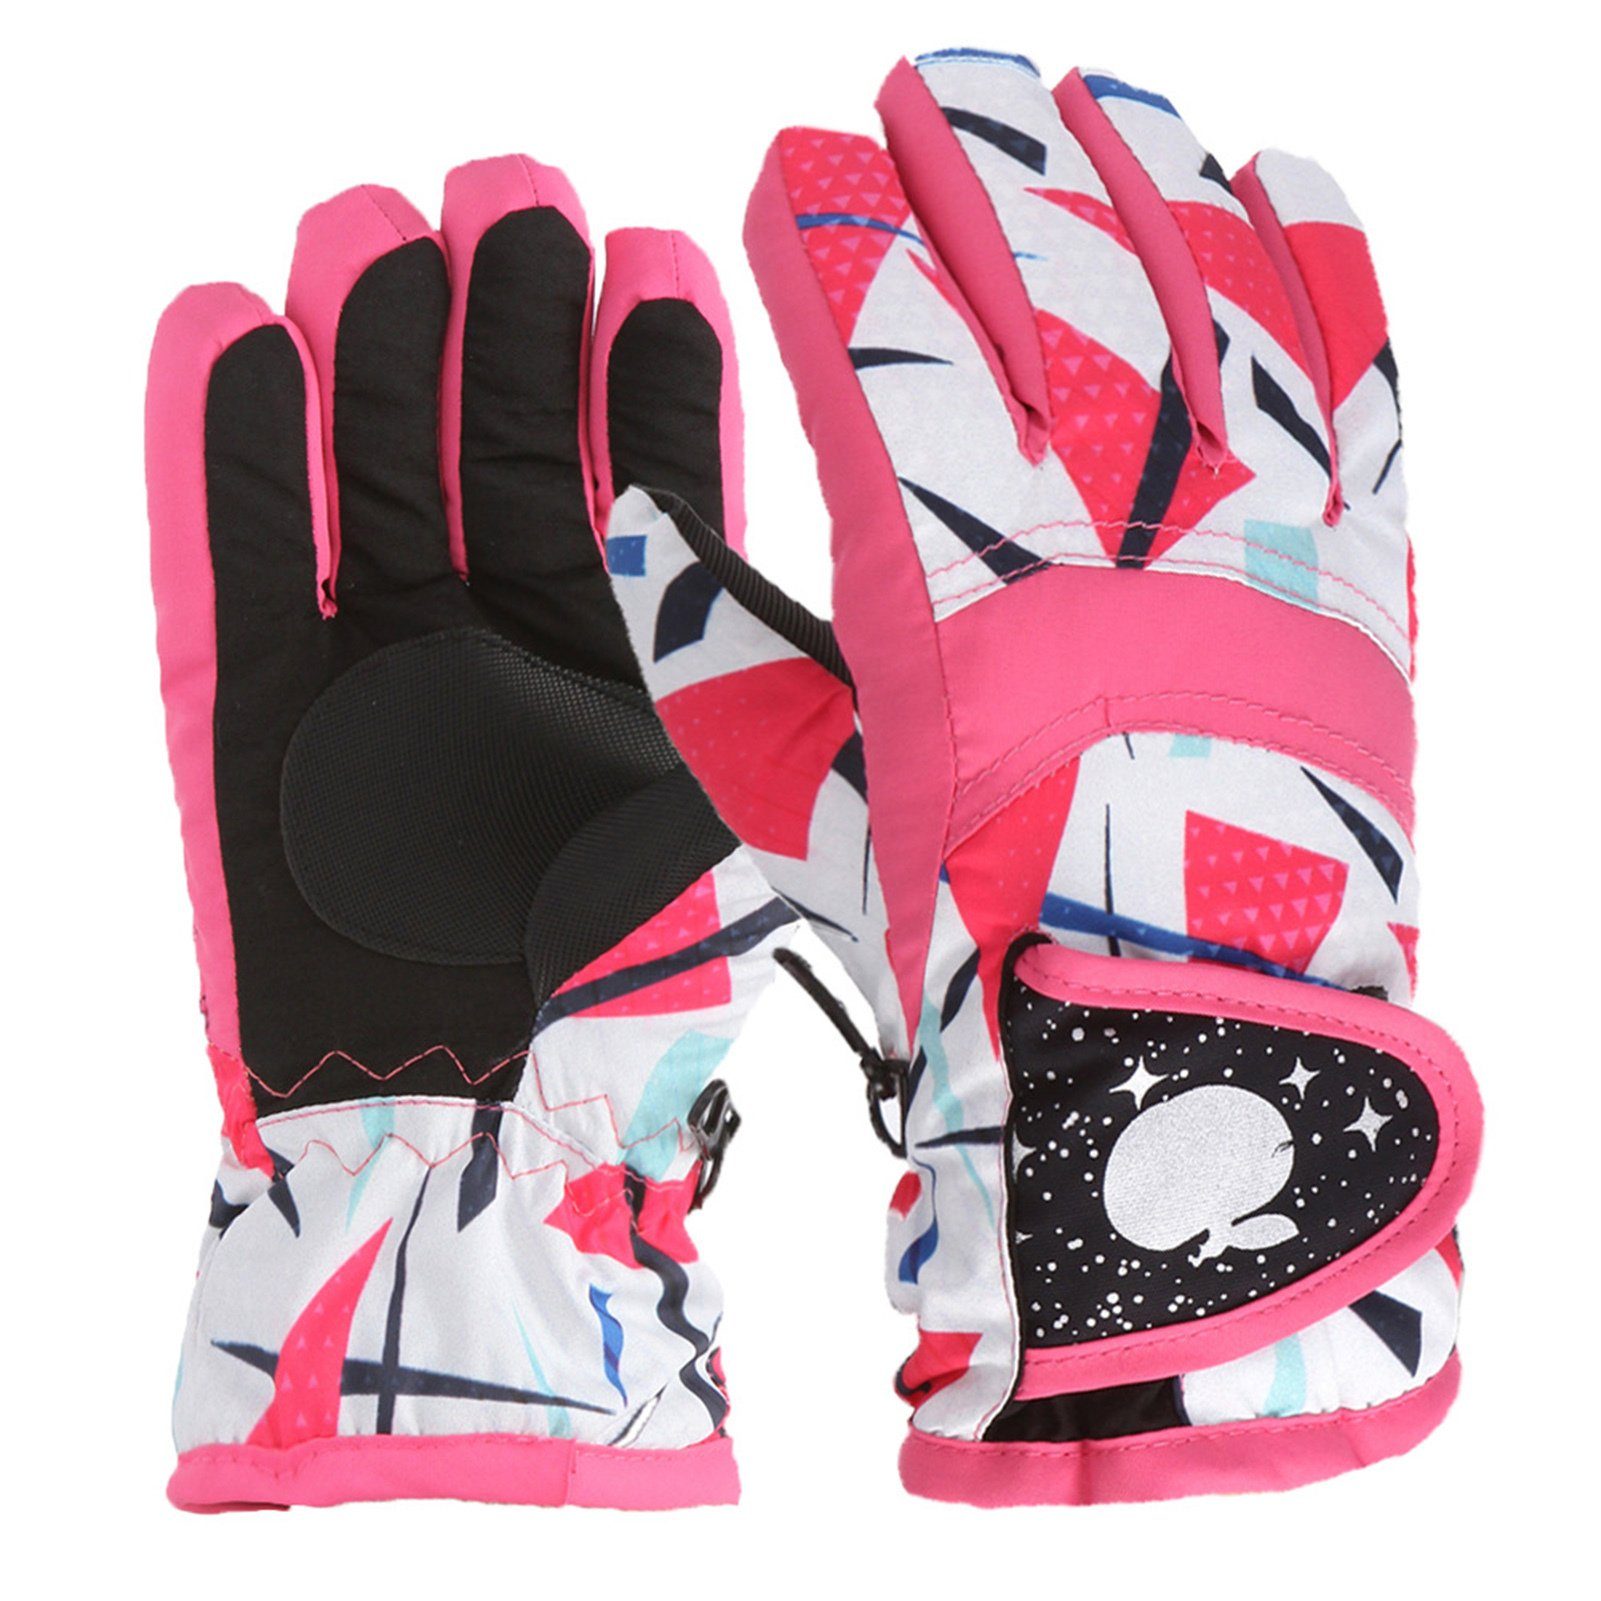 Blusmart Skihandschuhe Kinder-Skihandschuhe Mit Cartoon-Muster, Bequeme Handschuhe Für pink | Sporthandschuhe